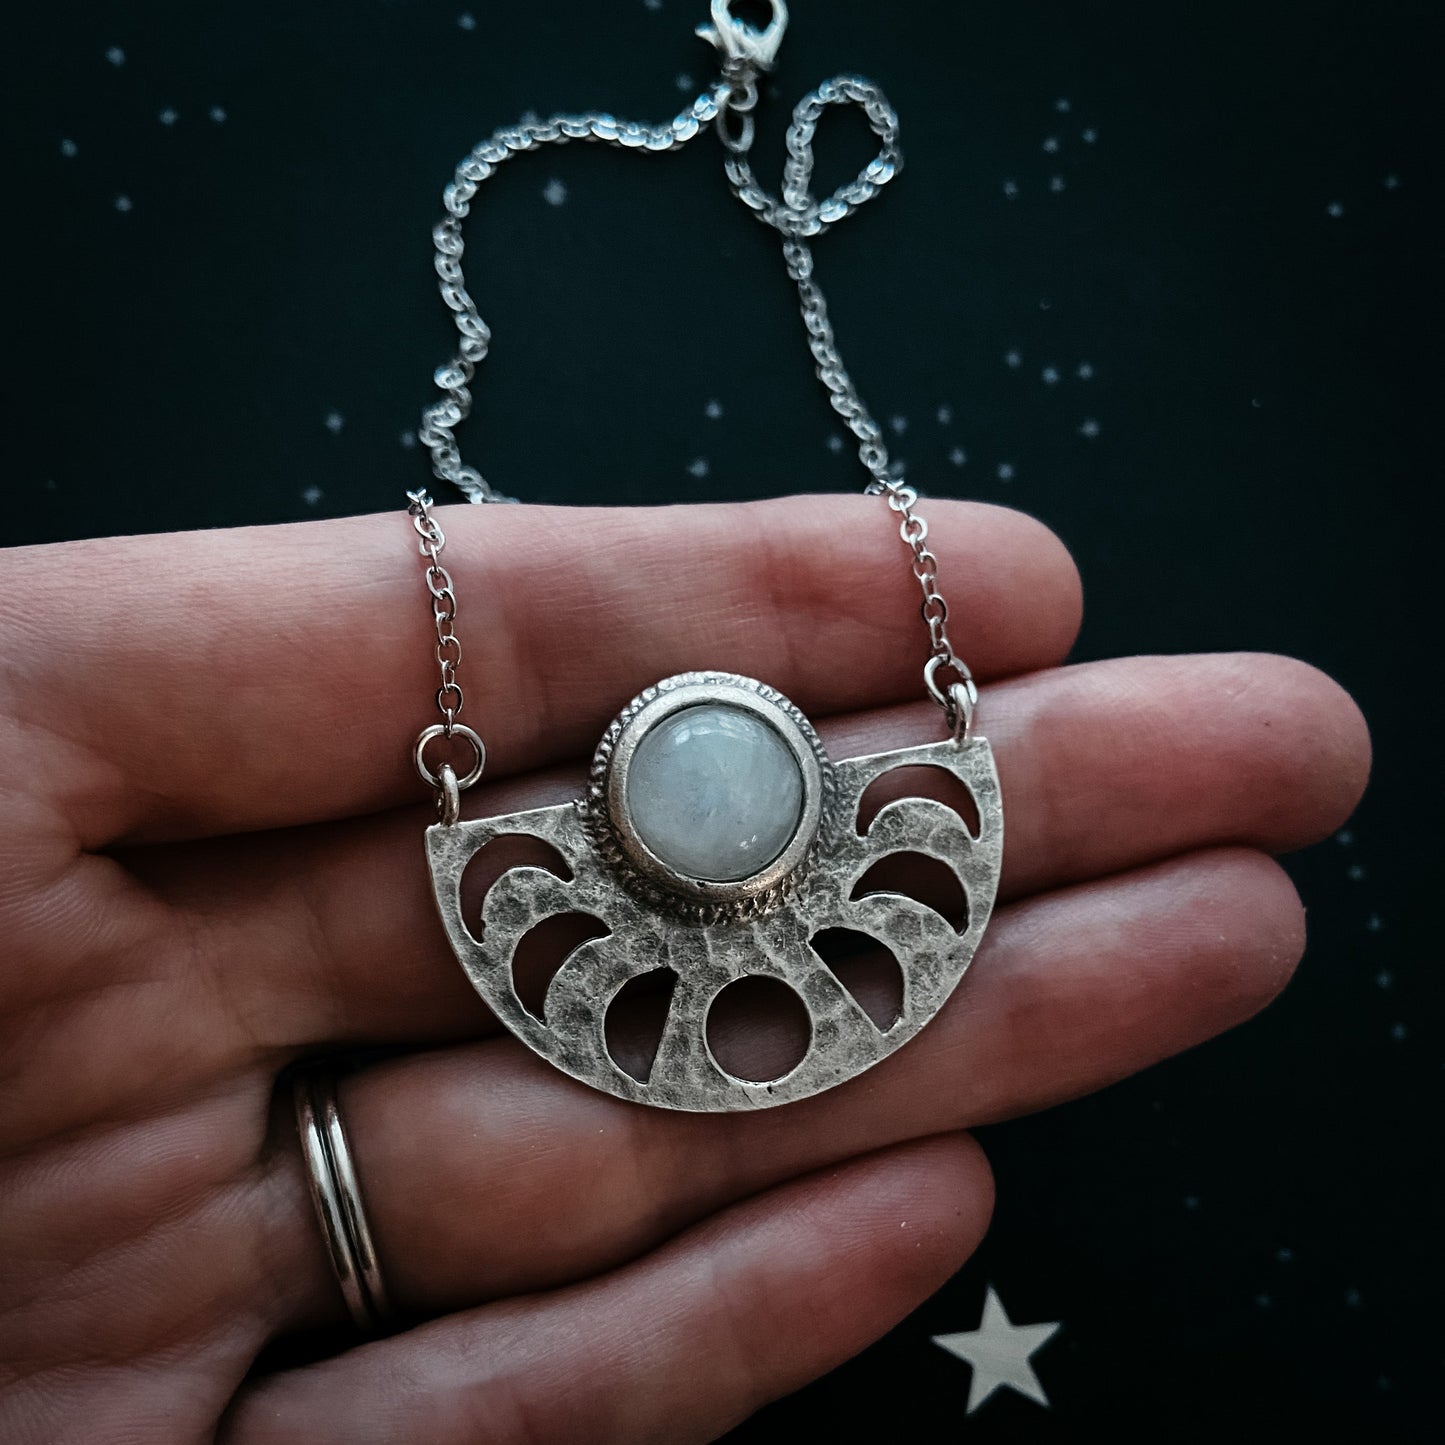 Moon Goddess Necklace - Moon Phases Rainbow Moonstone Pendant